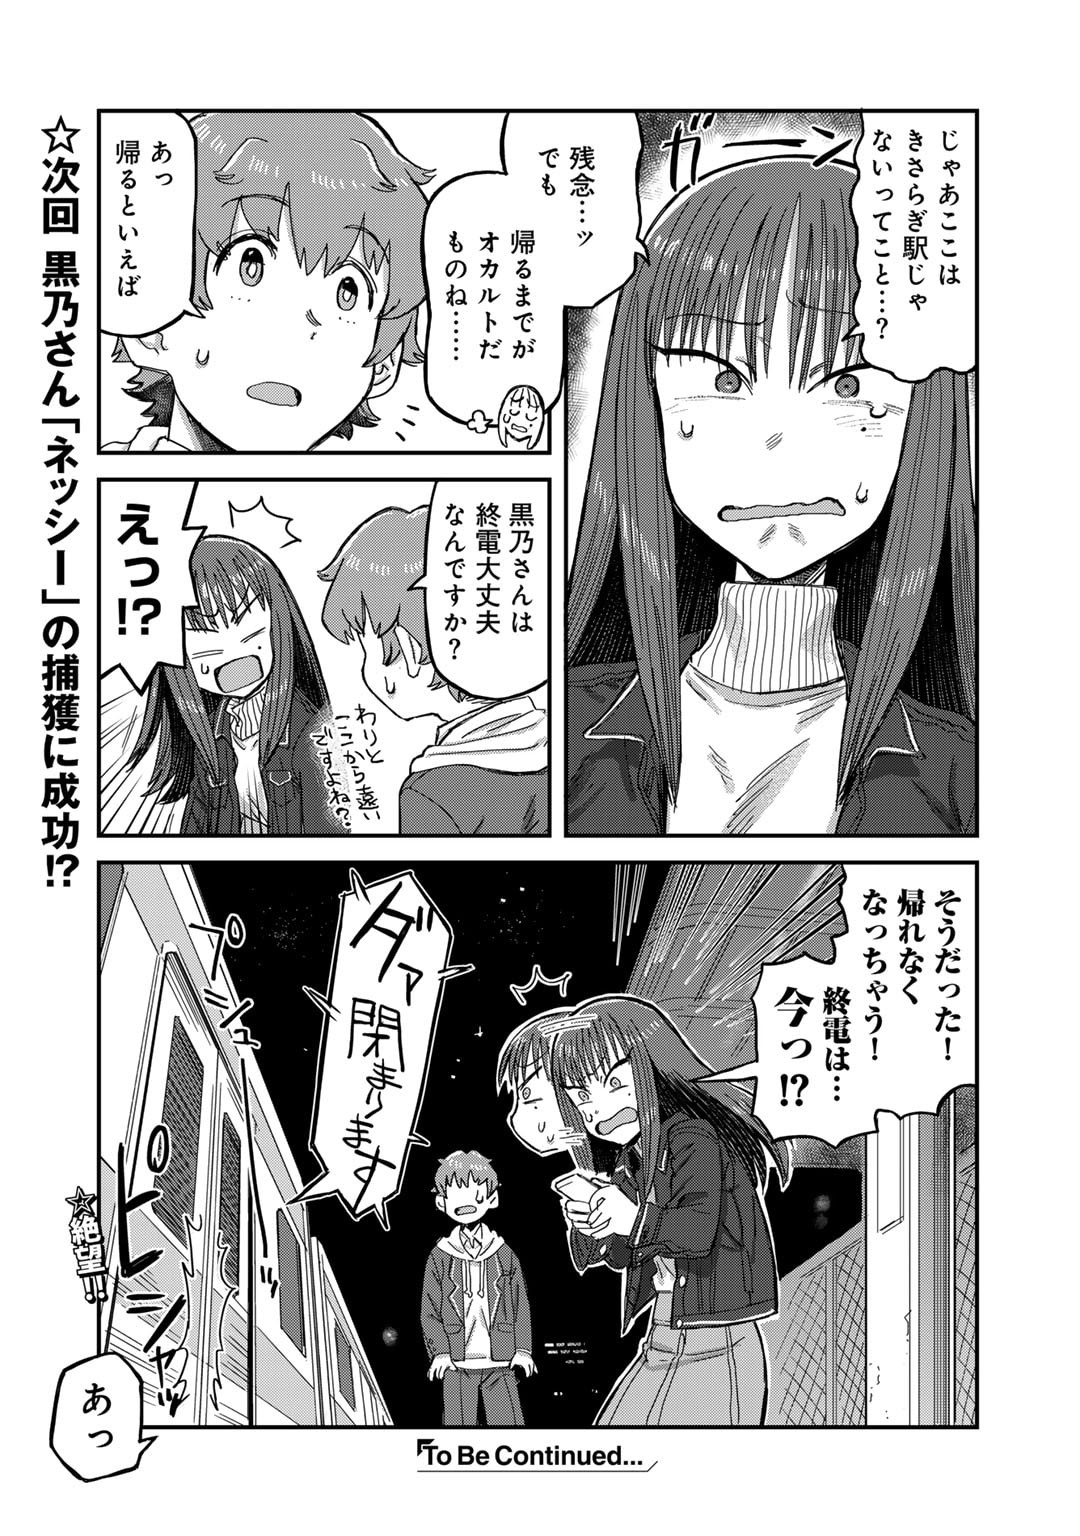 Kurono-san wa Occult ga Suki! - Chapter 4 - Page 22